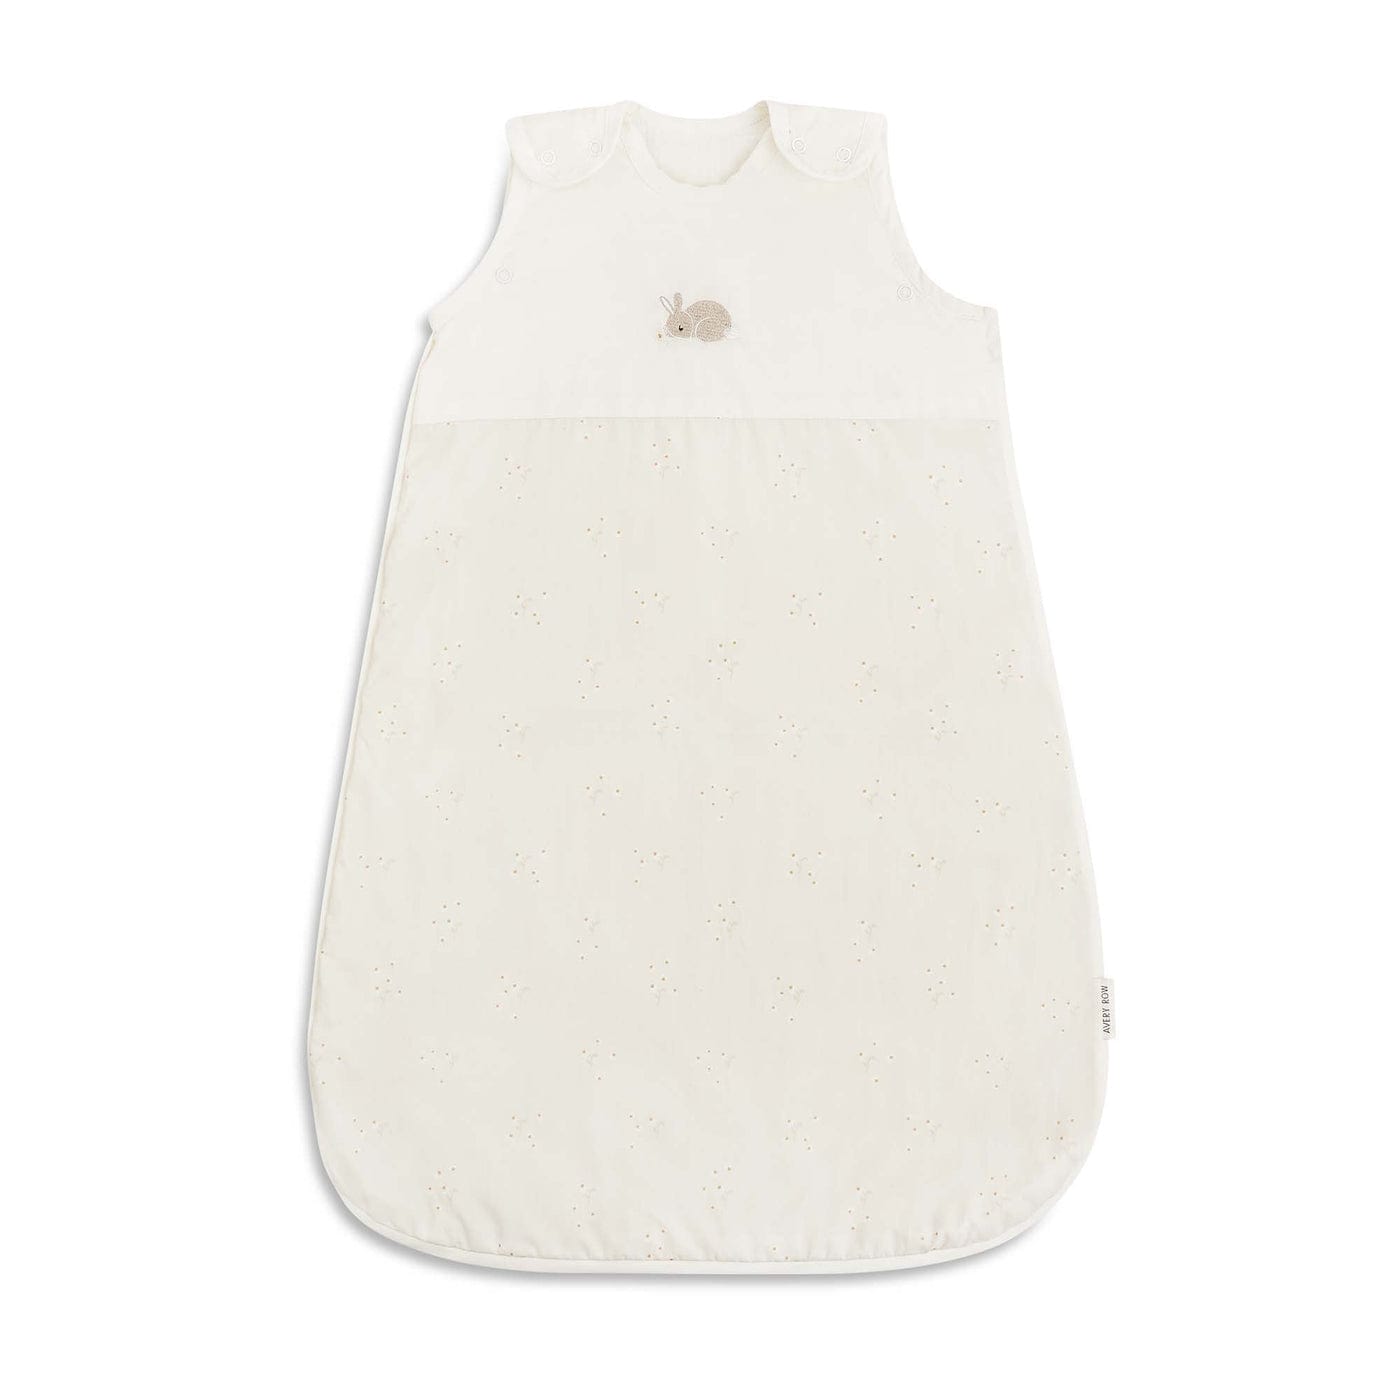 Avery Row Sleep Bag Organic Cotton Baby Sleep Bag Bunny (Cream)